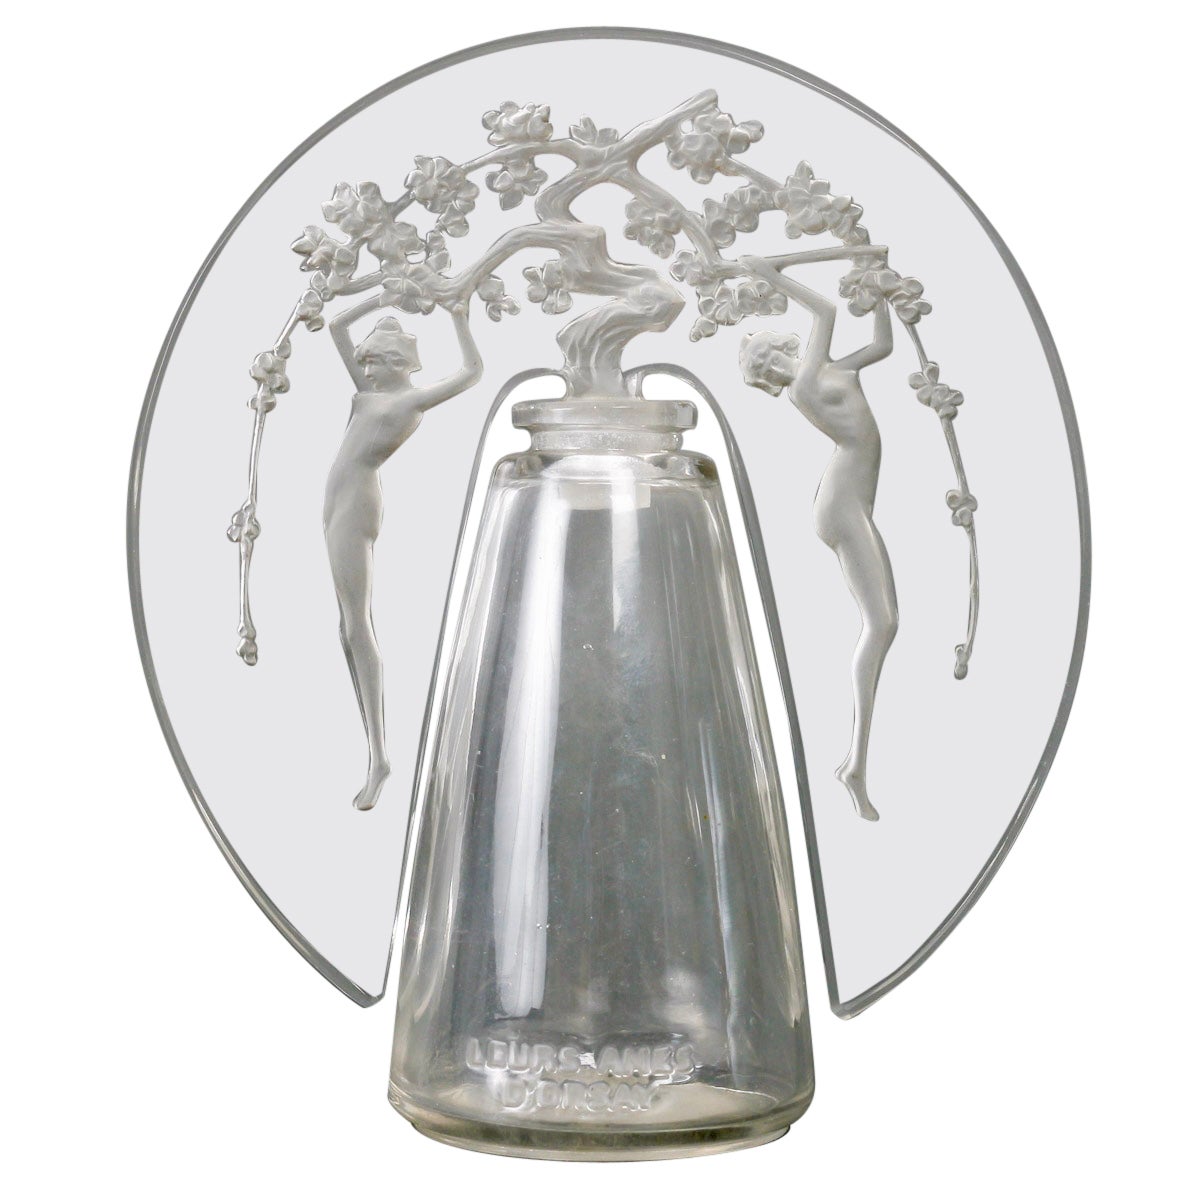 1913 Rene Lalique Tiara Perfume Bottle Leurs Ame D'Orsay Glass For Sale